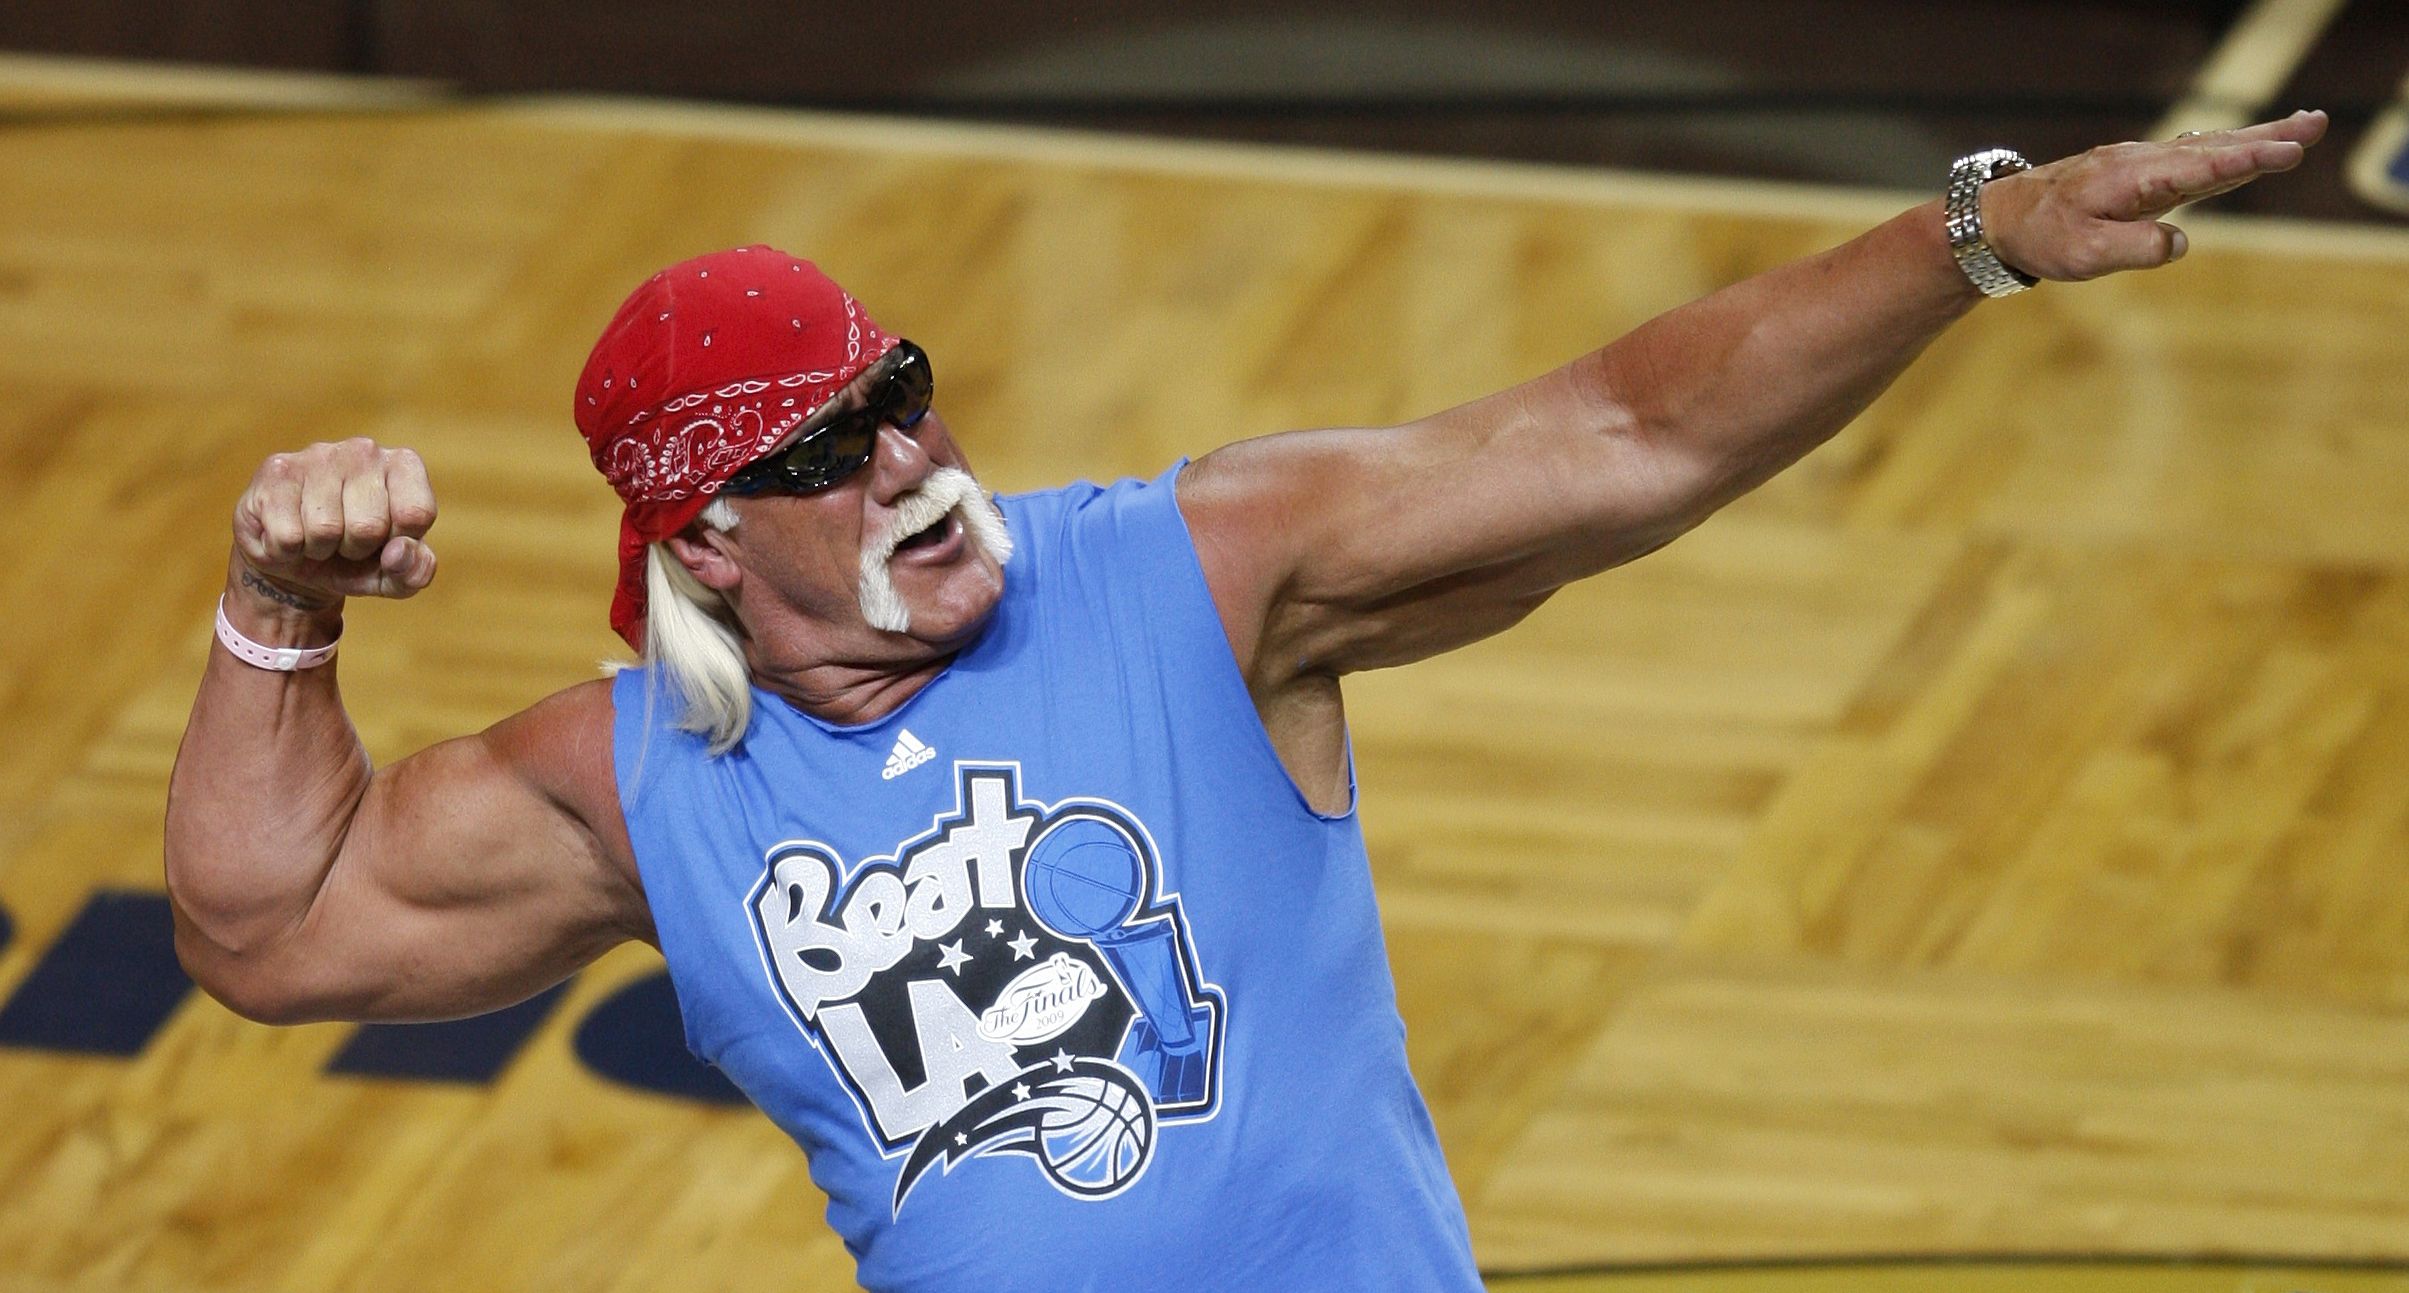 Hulk Hogan's Gawker lawsuit over sex tape